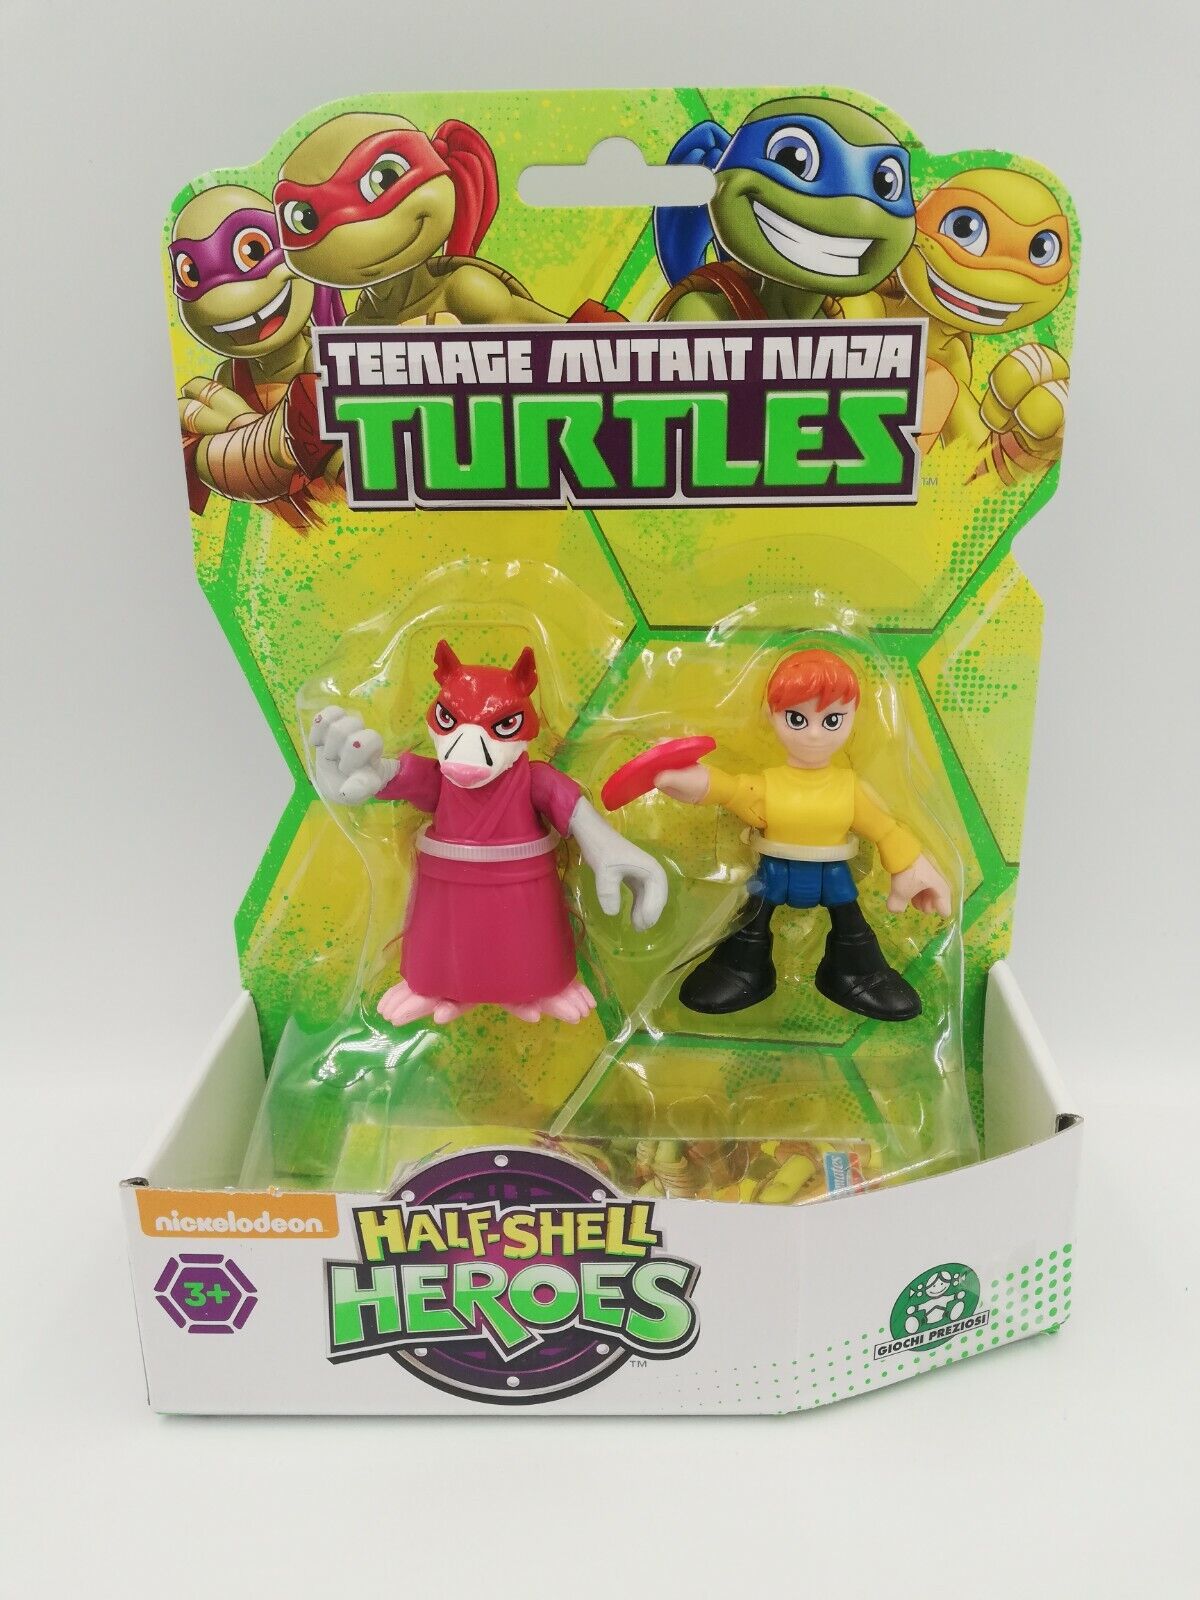 90s Ninja Turtles Toys: Heroes in a Half Shell